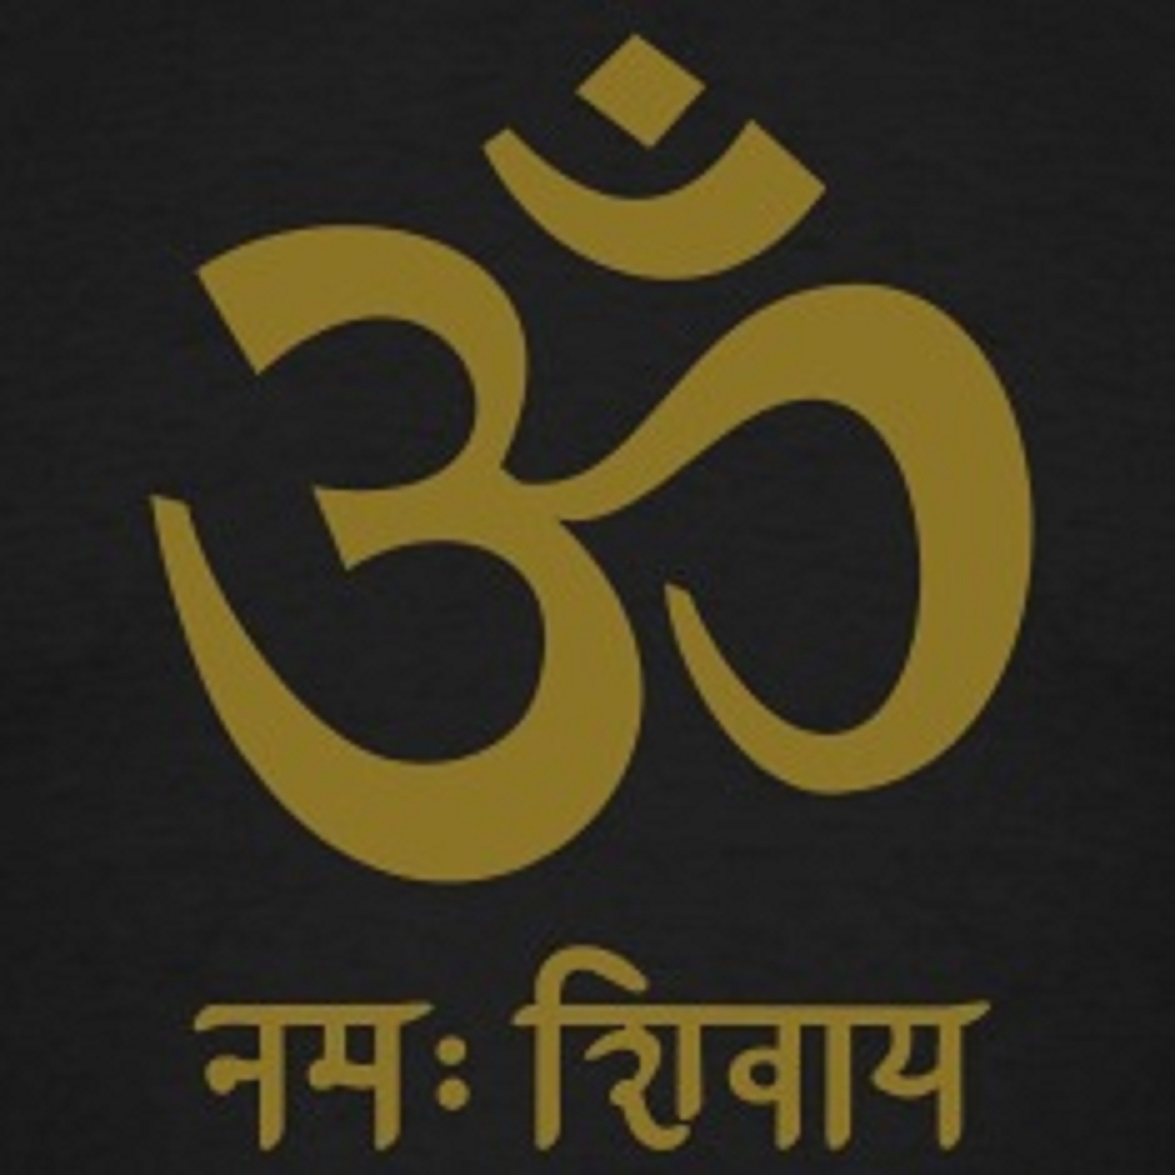 Шивайя намах шивайя нама ом значение. Om Namah Shivaya санскрит. Ом Намах Шивая на санскрите. Мантра ом Намах Шивайя на санскрите. Ом надпись на санскрите.